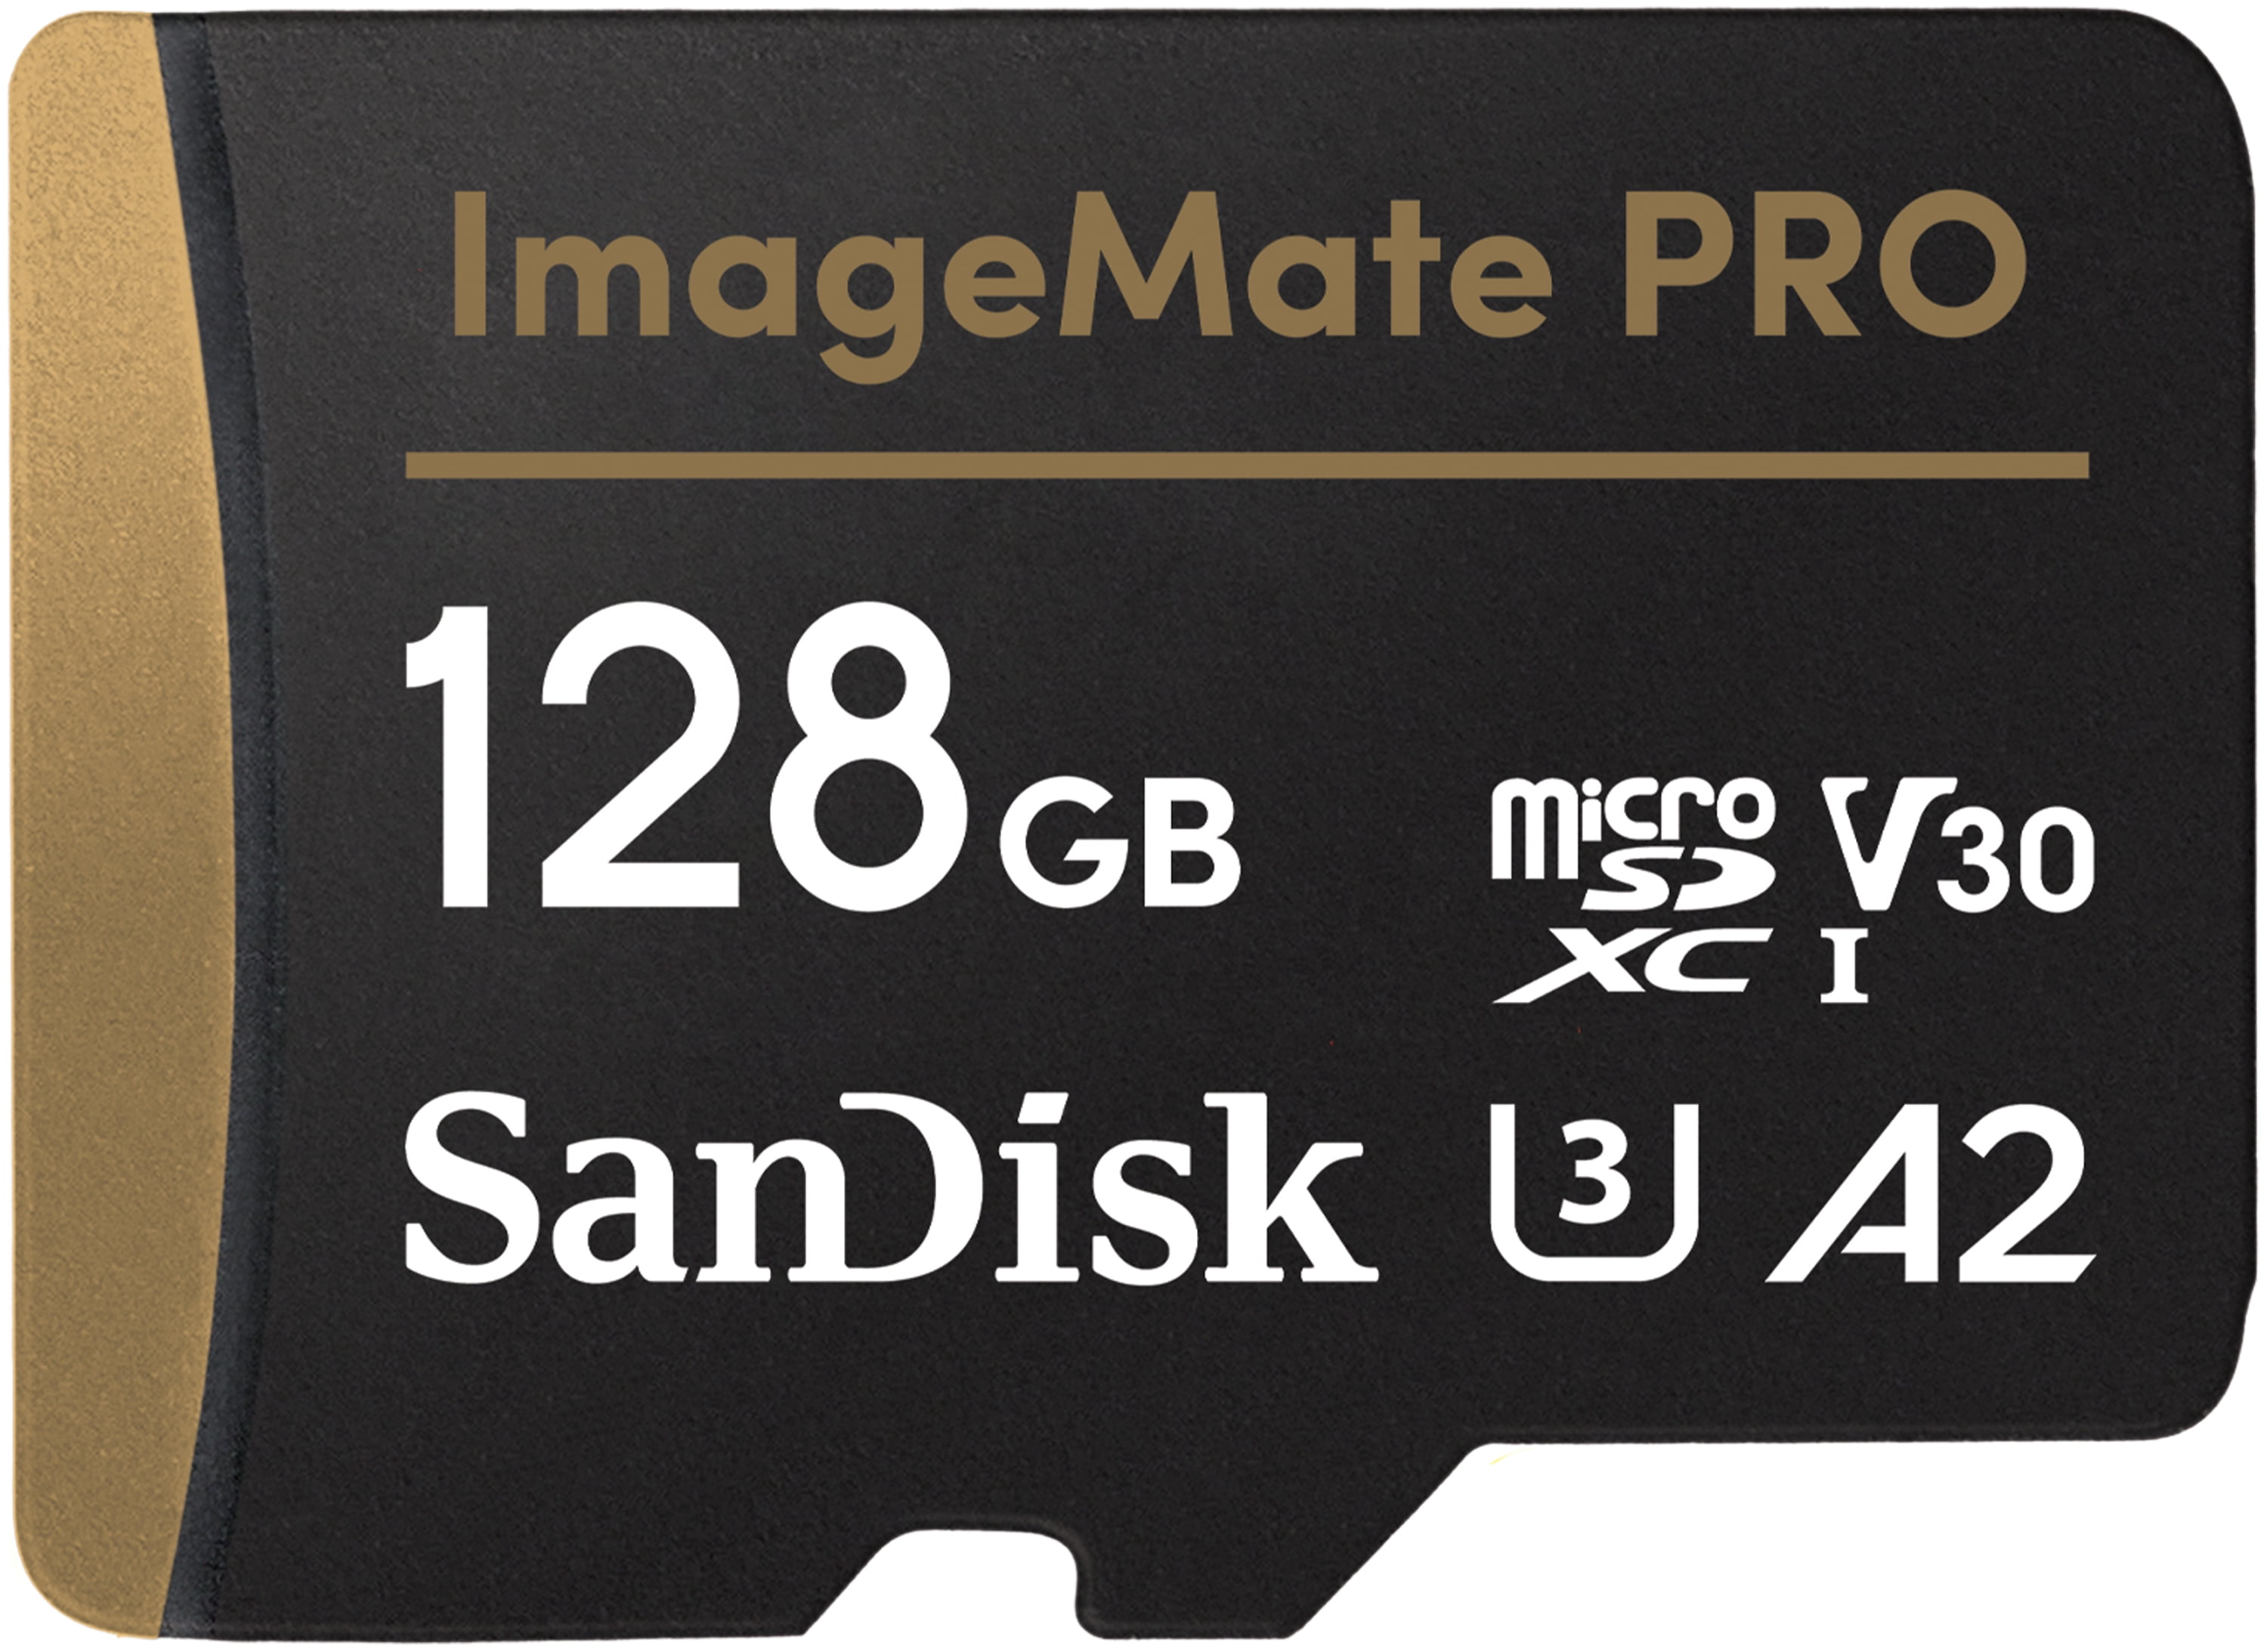 Imagination Glare doll SanDisk 128GB ImageMate PRO microSDXC UHS-1 Memory Card with Adapter -  170MB/s, C10, U3, V30, 4K UHD, A2 Micro SD Card - SDSQXBZ-128G-AW6KA -  Walmart.com